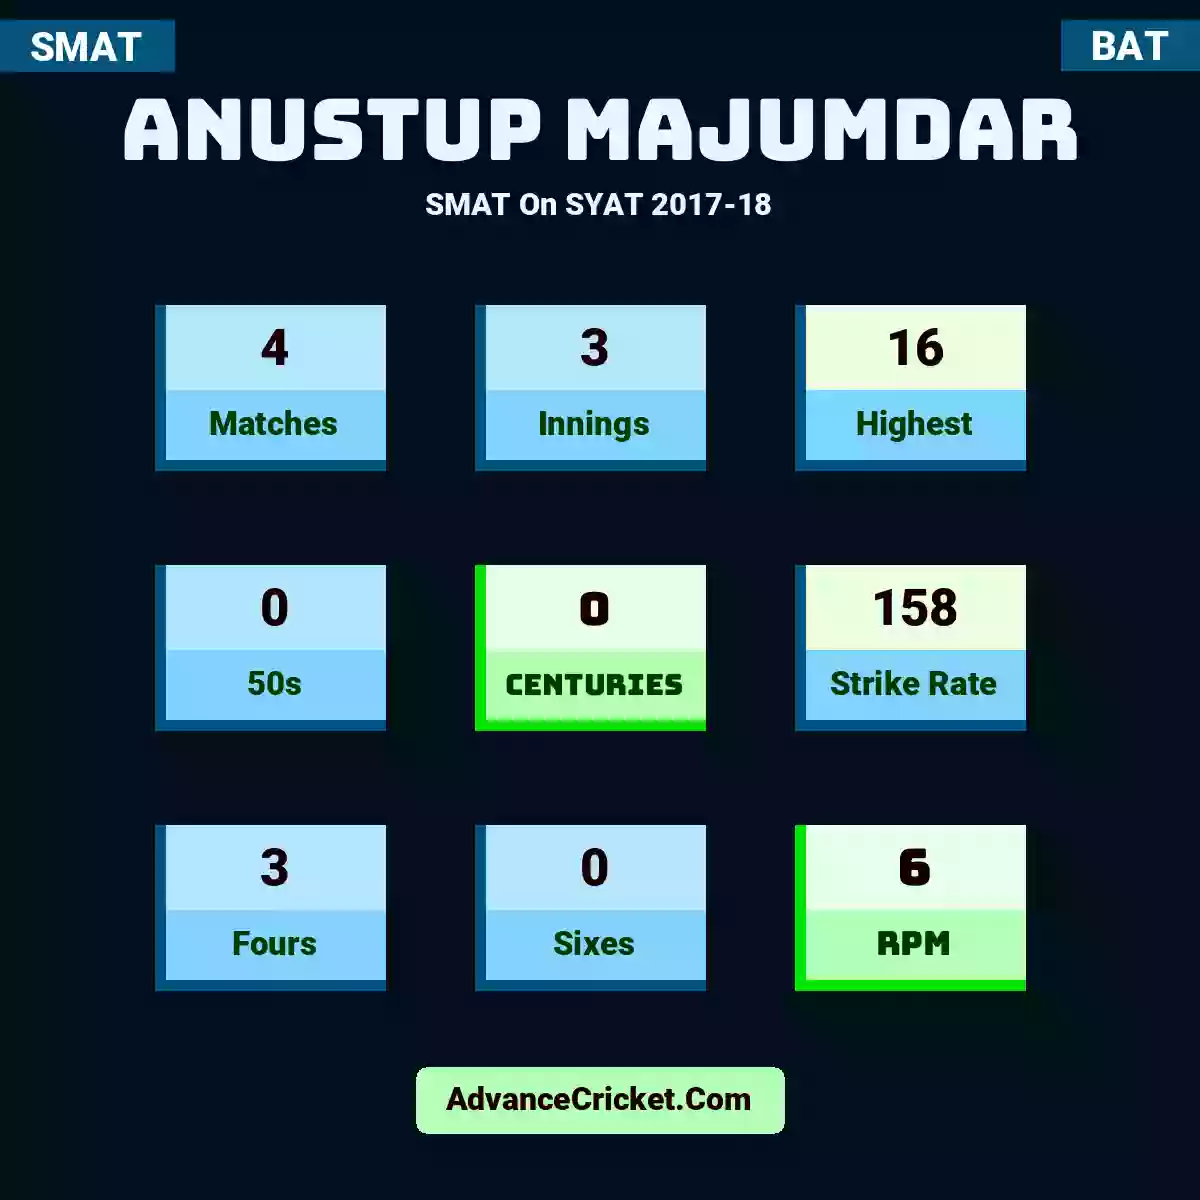 Anustup Majumdar SMAT  On SYAT 2017-18, Anustup Majumdar played 4 matches, scored 16 runs as highest, 0 half-centuries, and 0 centuries, with a strike rate of 158. A.Majumdar hit 3 fours and 0 sixes, with an RPM of 6.